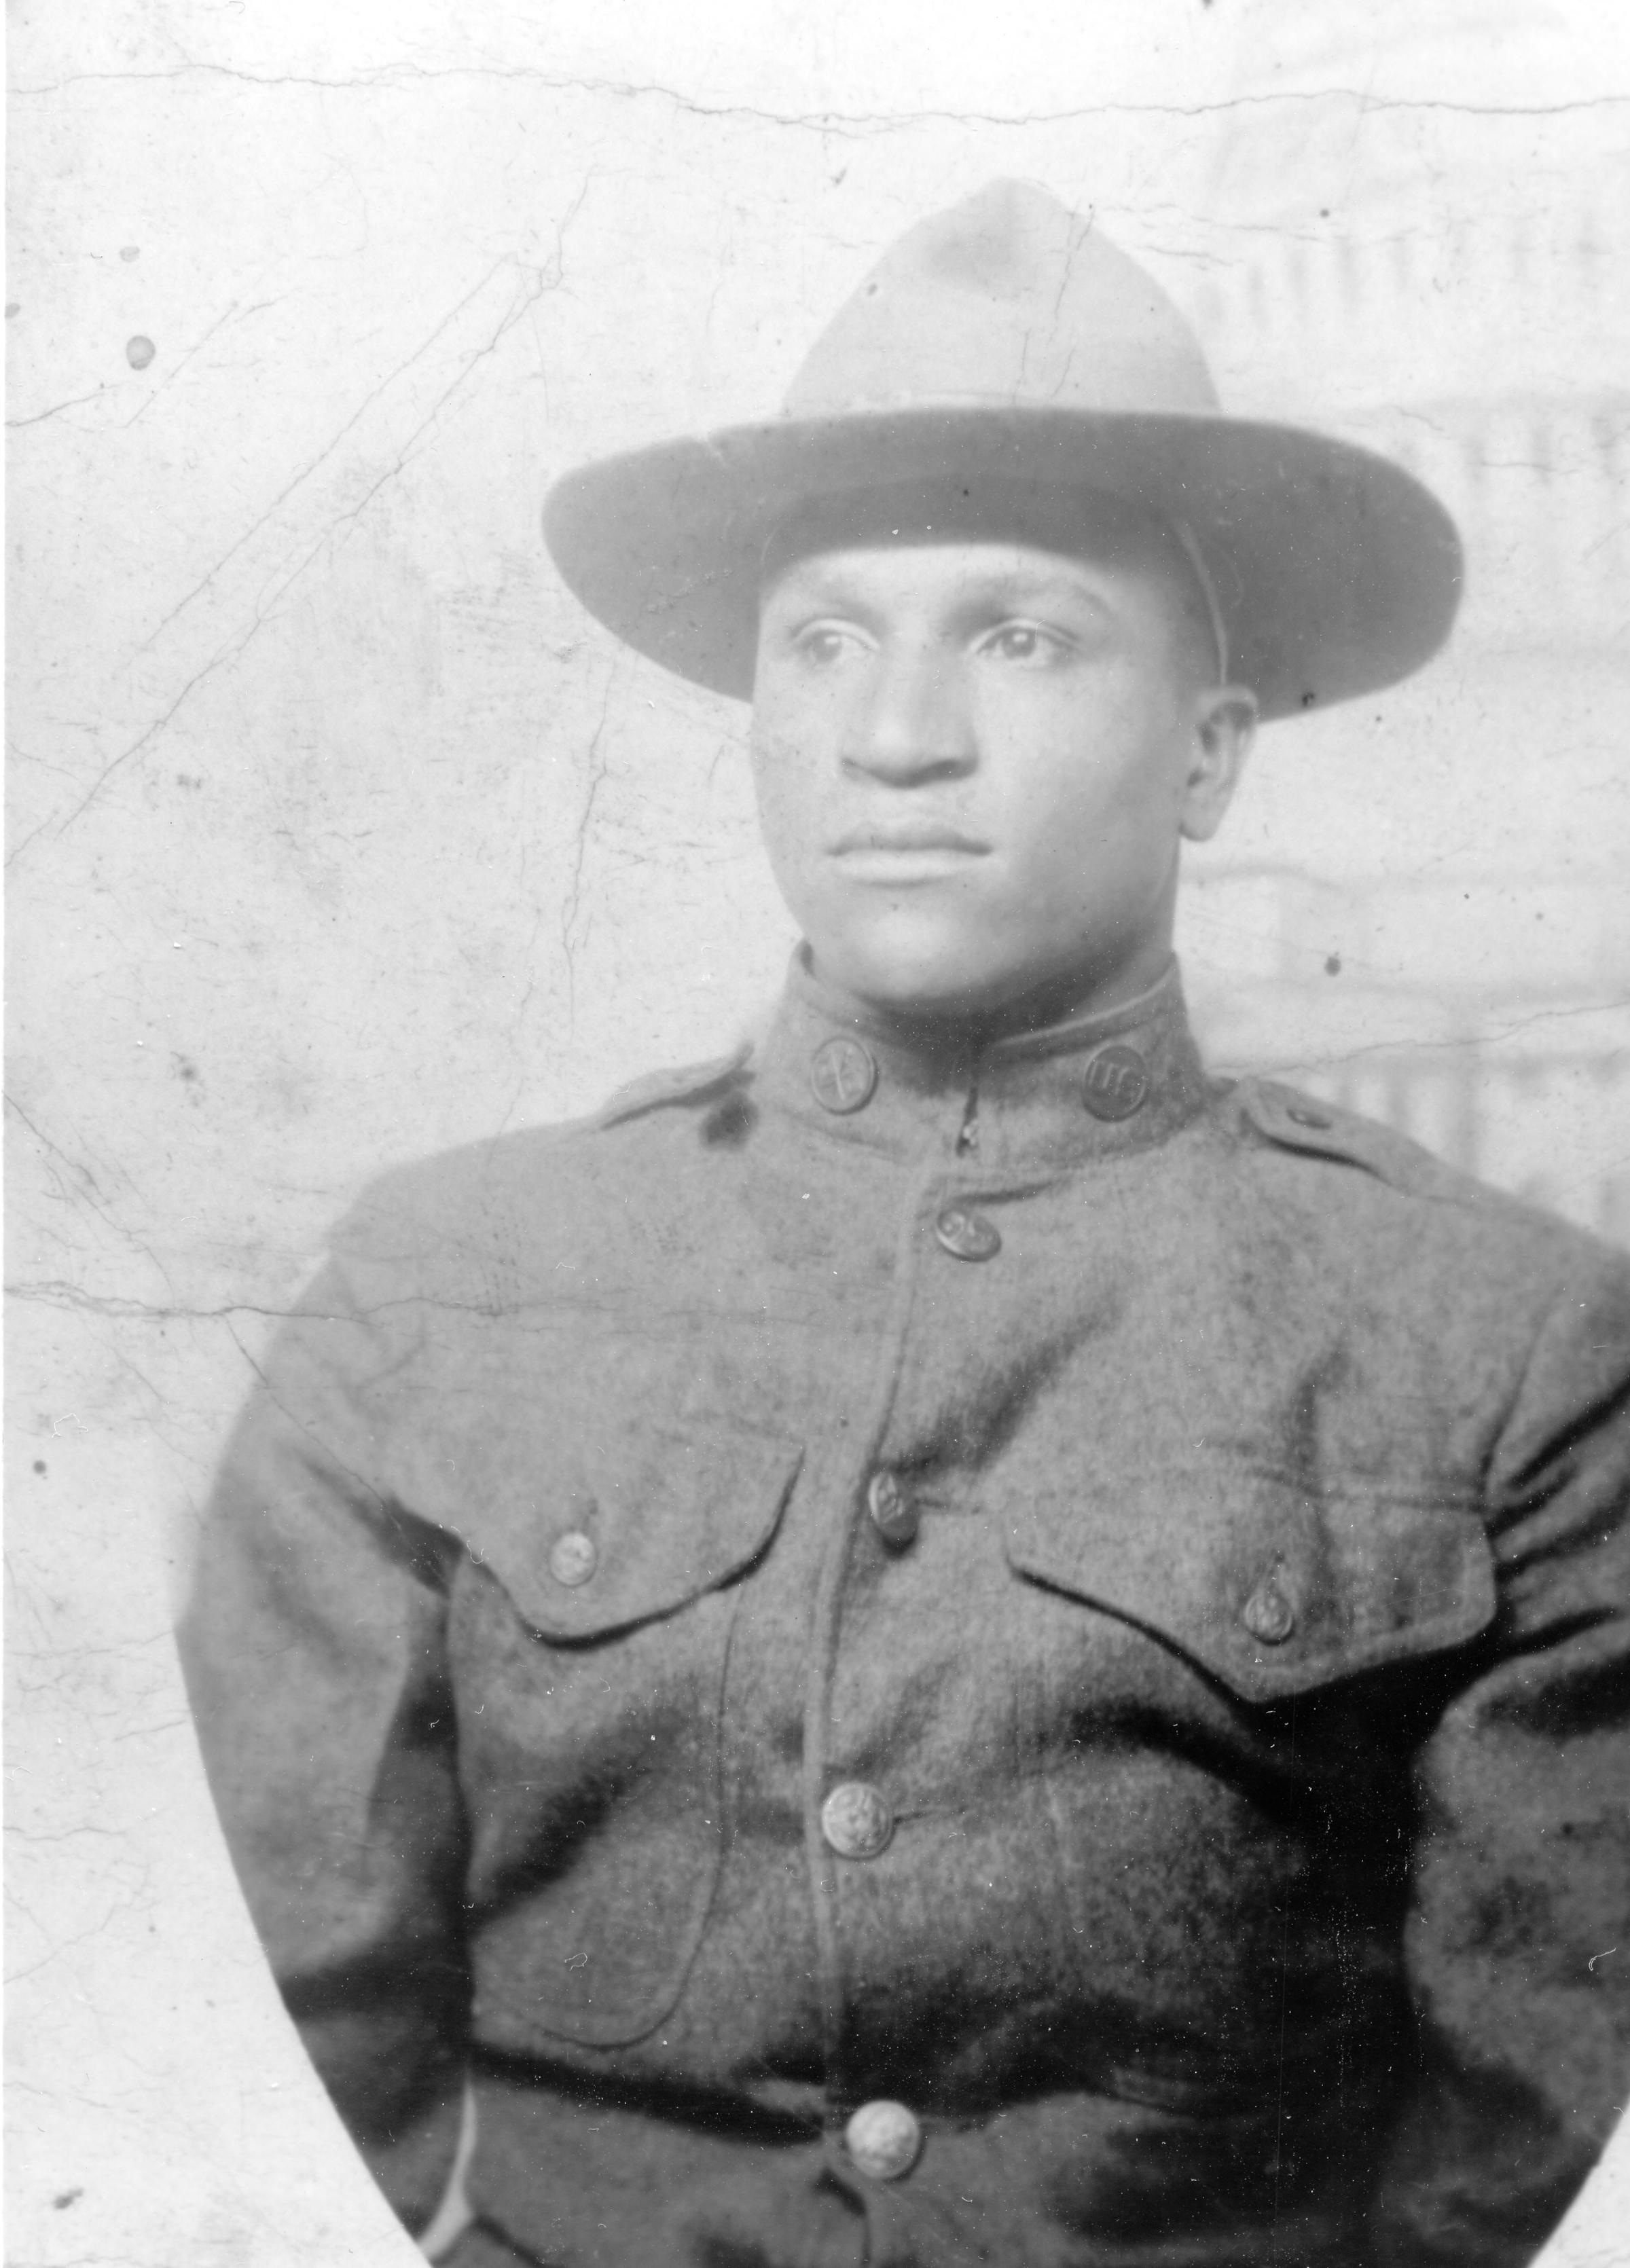 Joseph Johnson in Army uniform